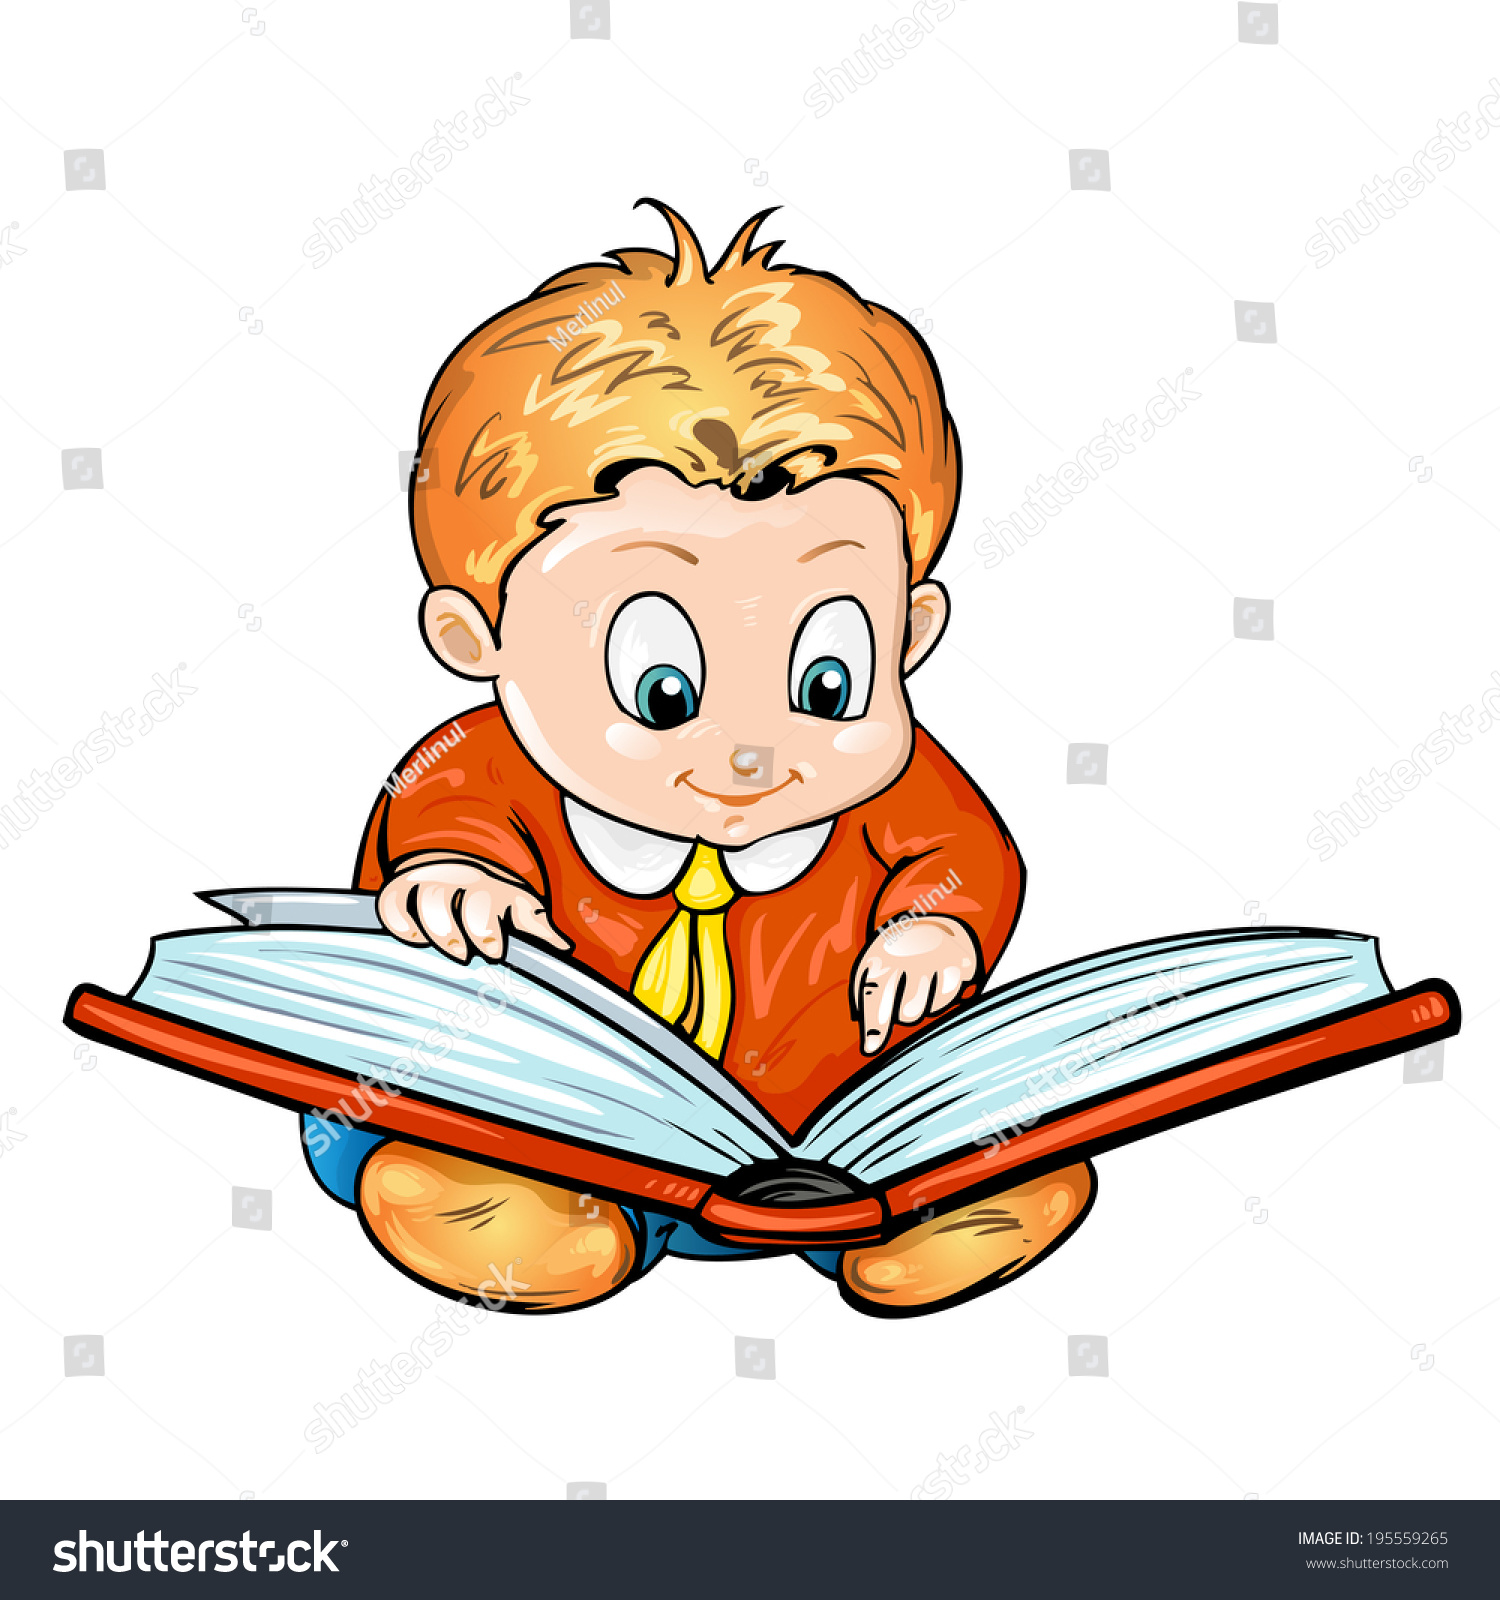 Images Of Cartoon Image Child Reading